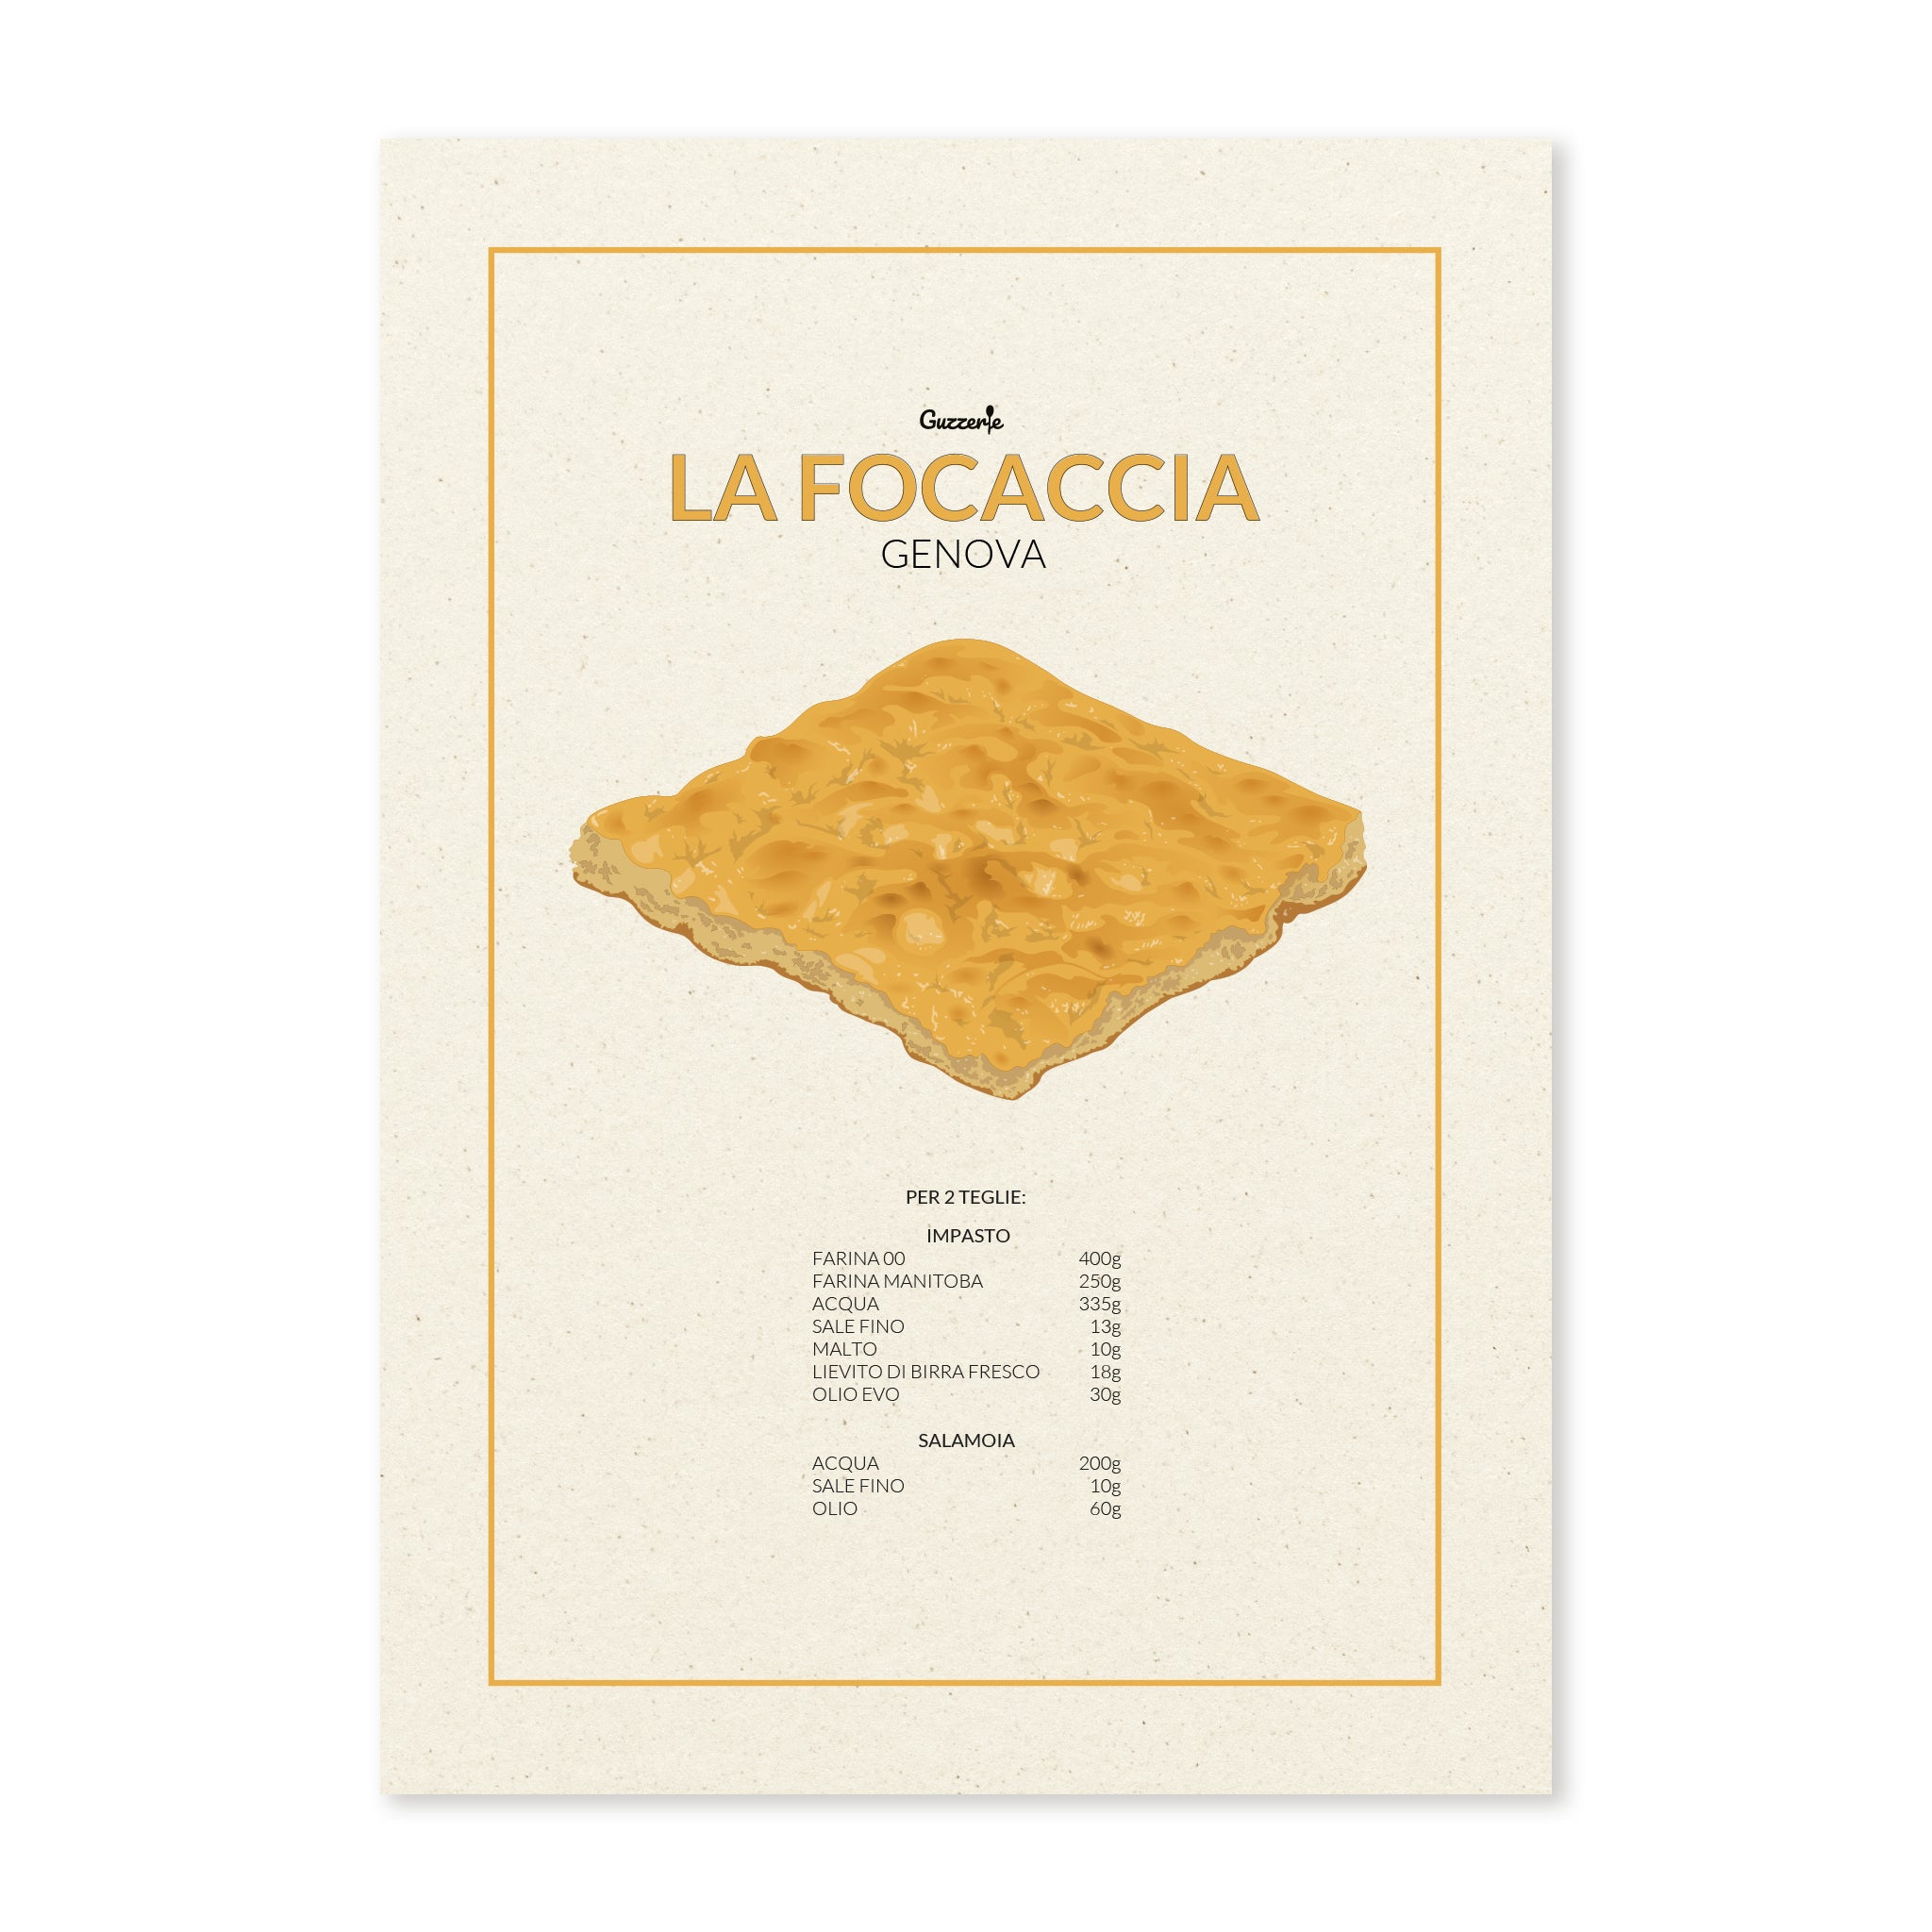 Iconic Poster of Focaccia | Guzzerie